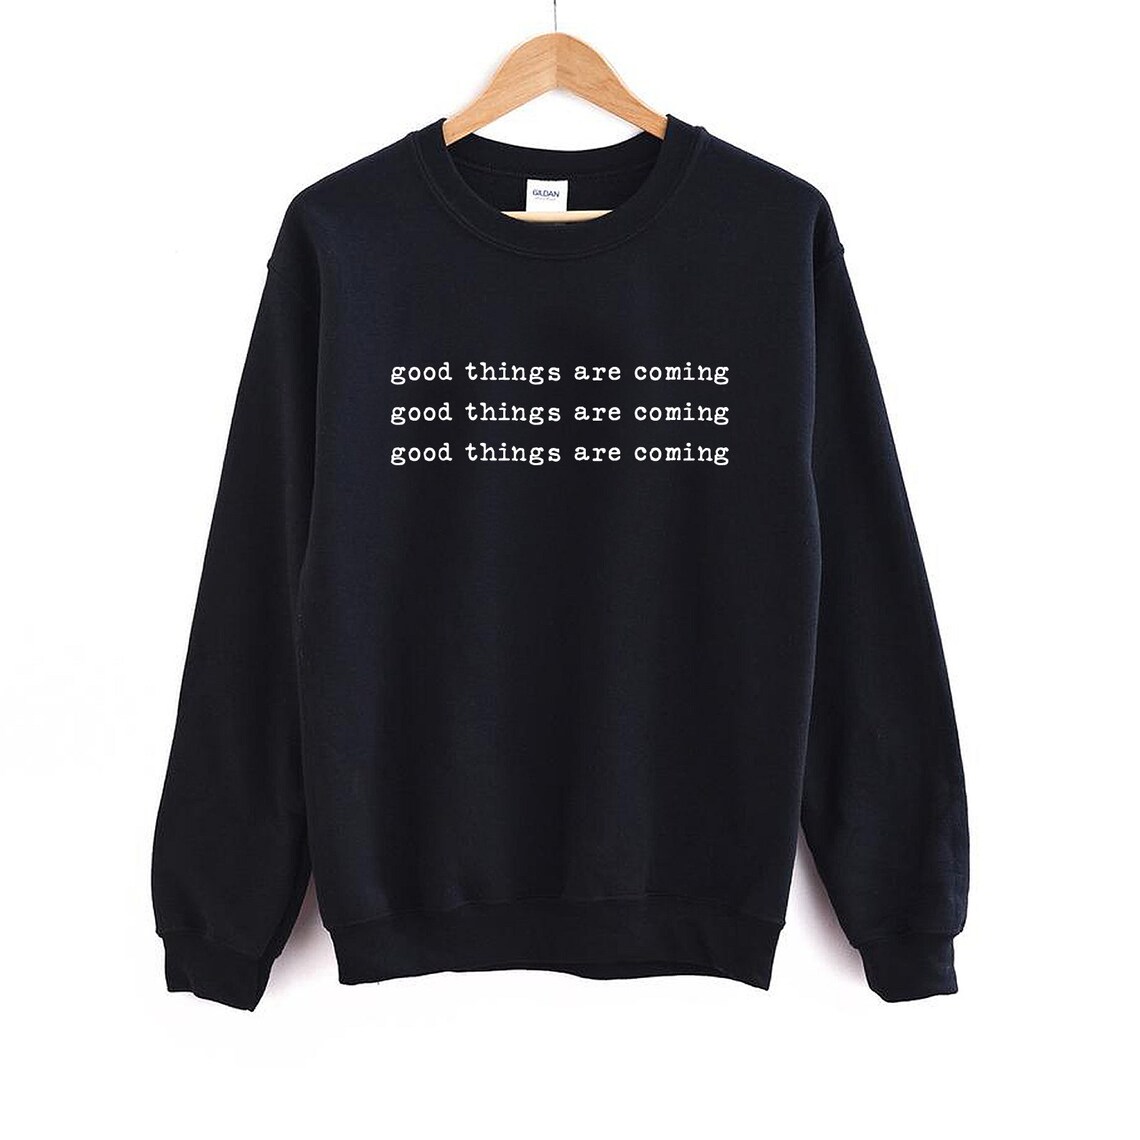 Good Things Are Coming Sweatshirt Inspirational Sweatshirt | Etsy